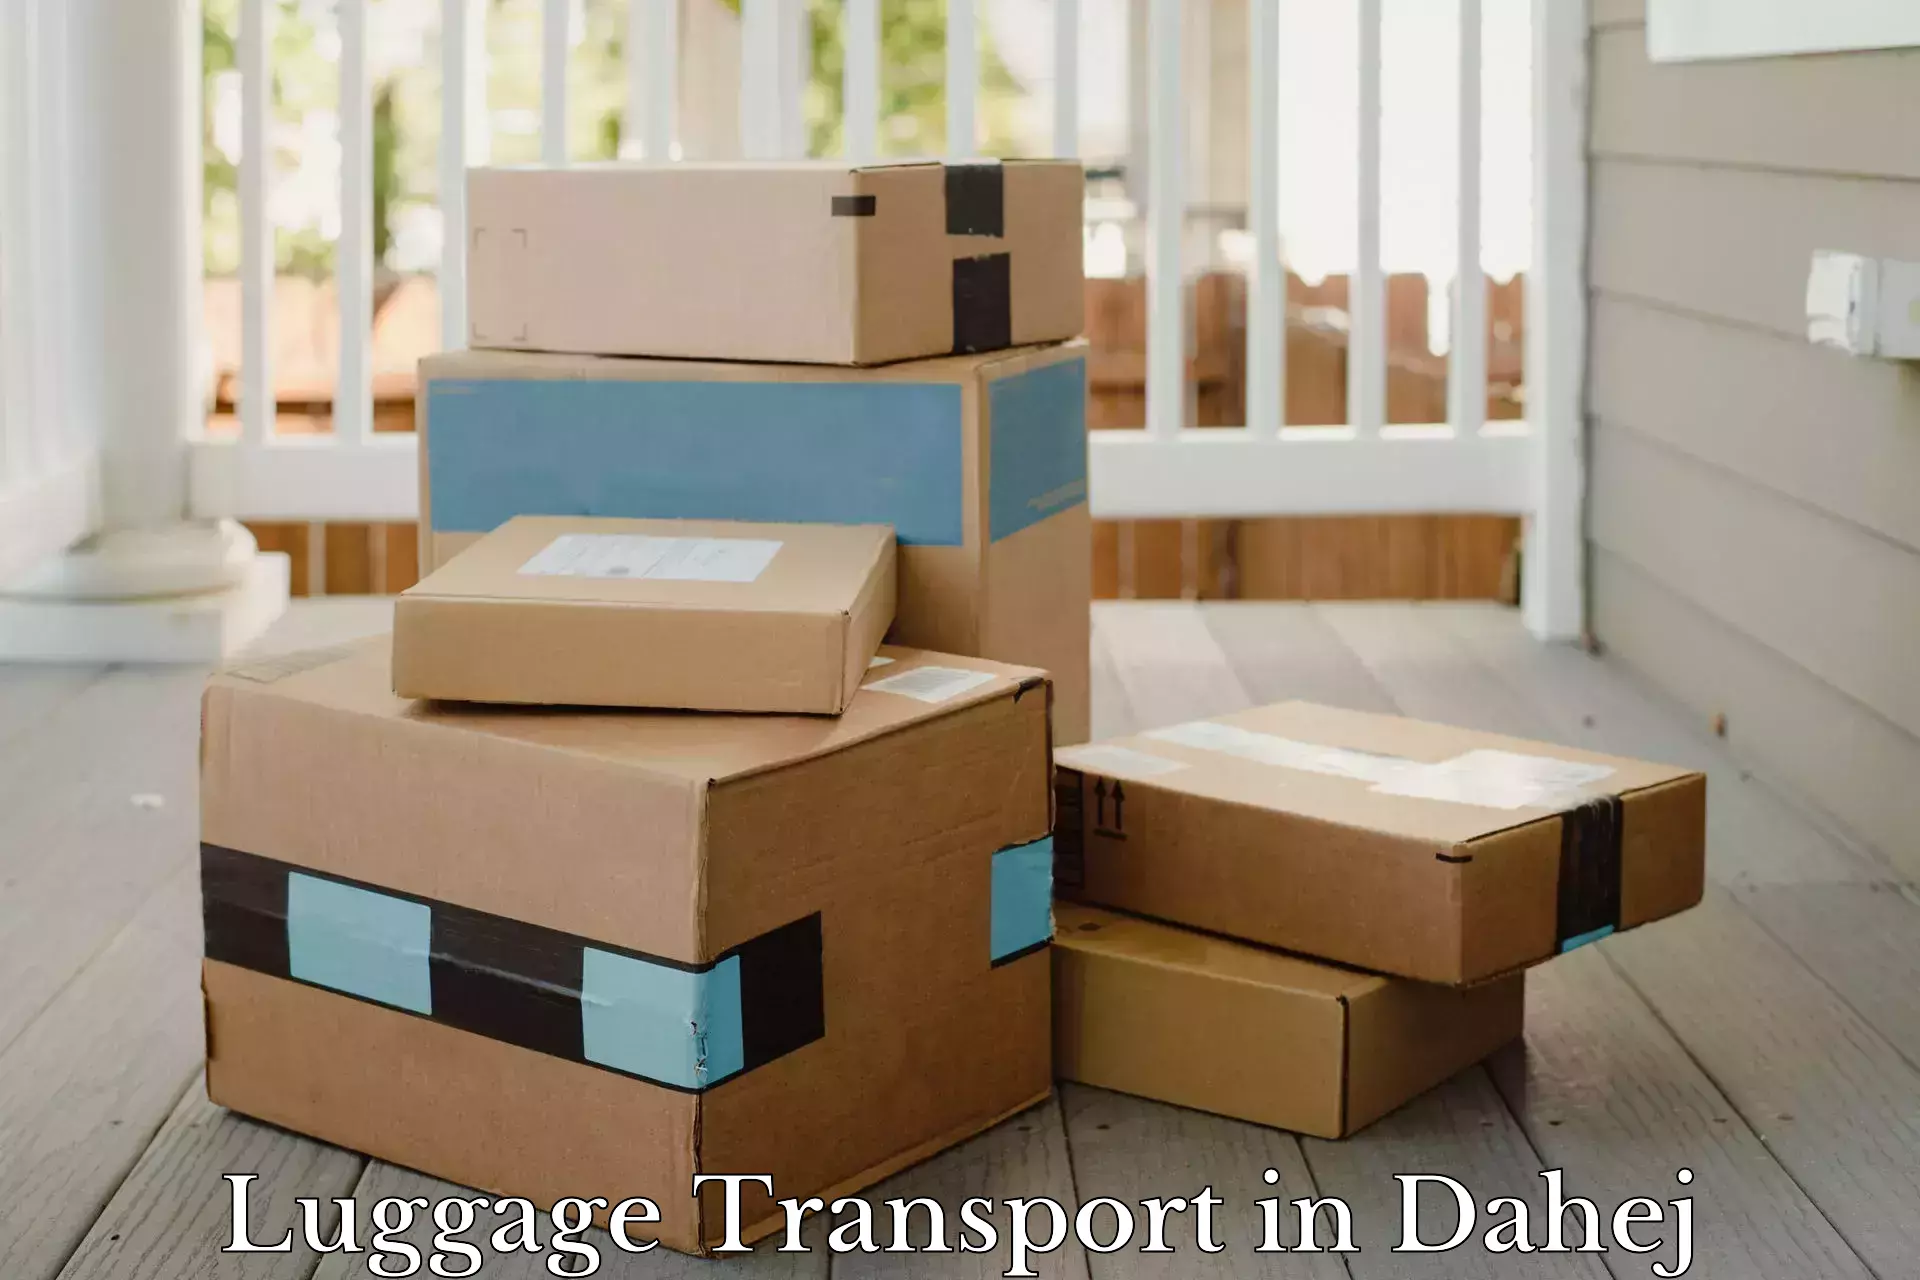 Door to door luggage delivery in Dahej